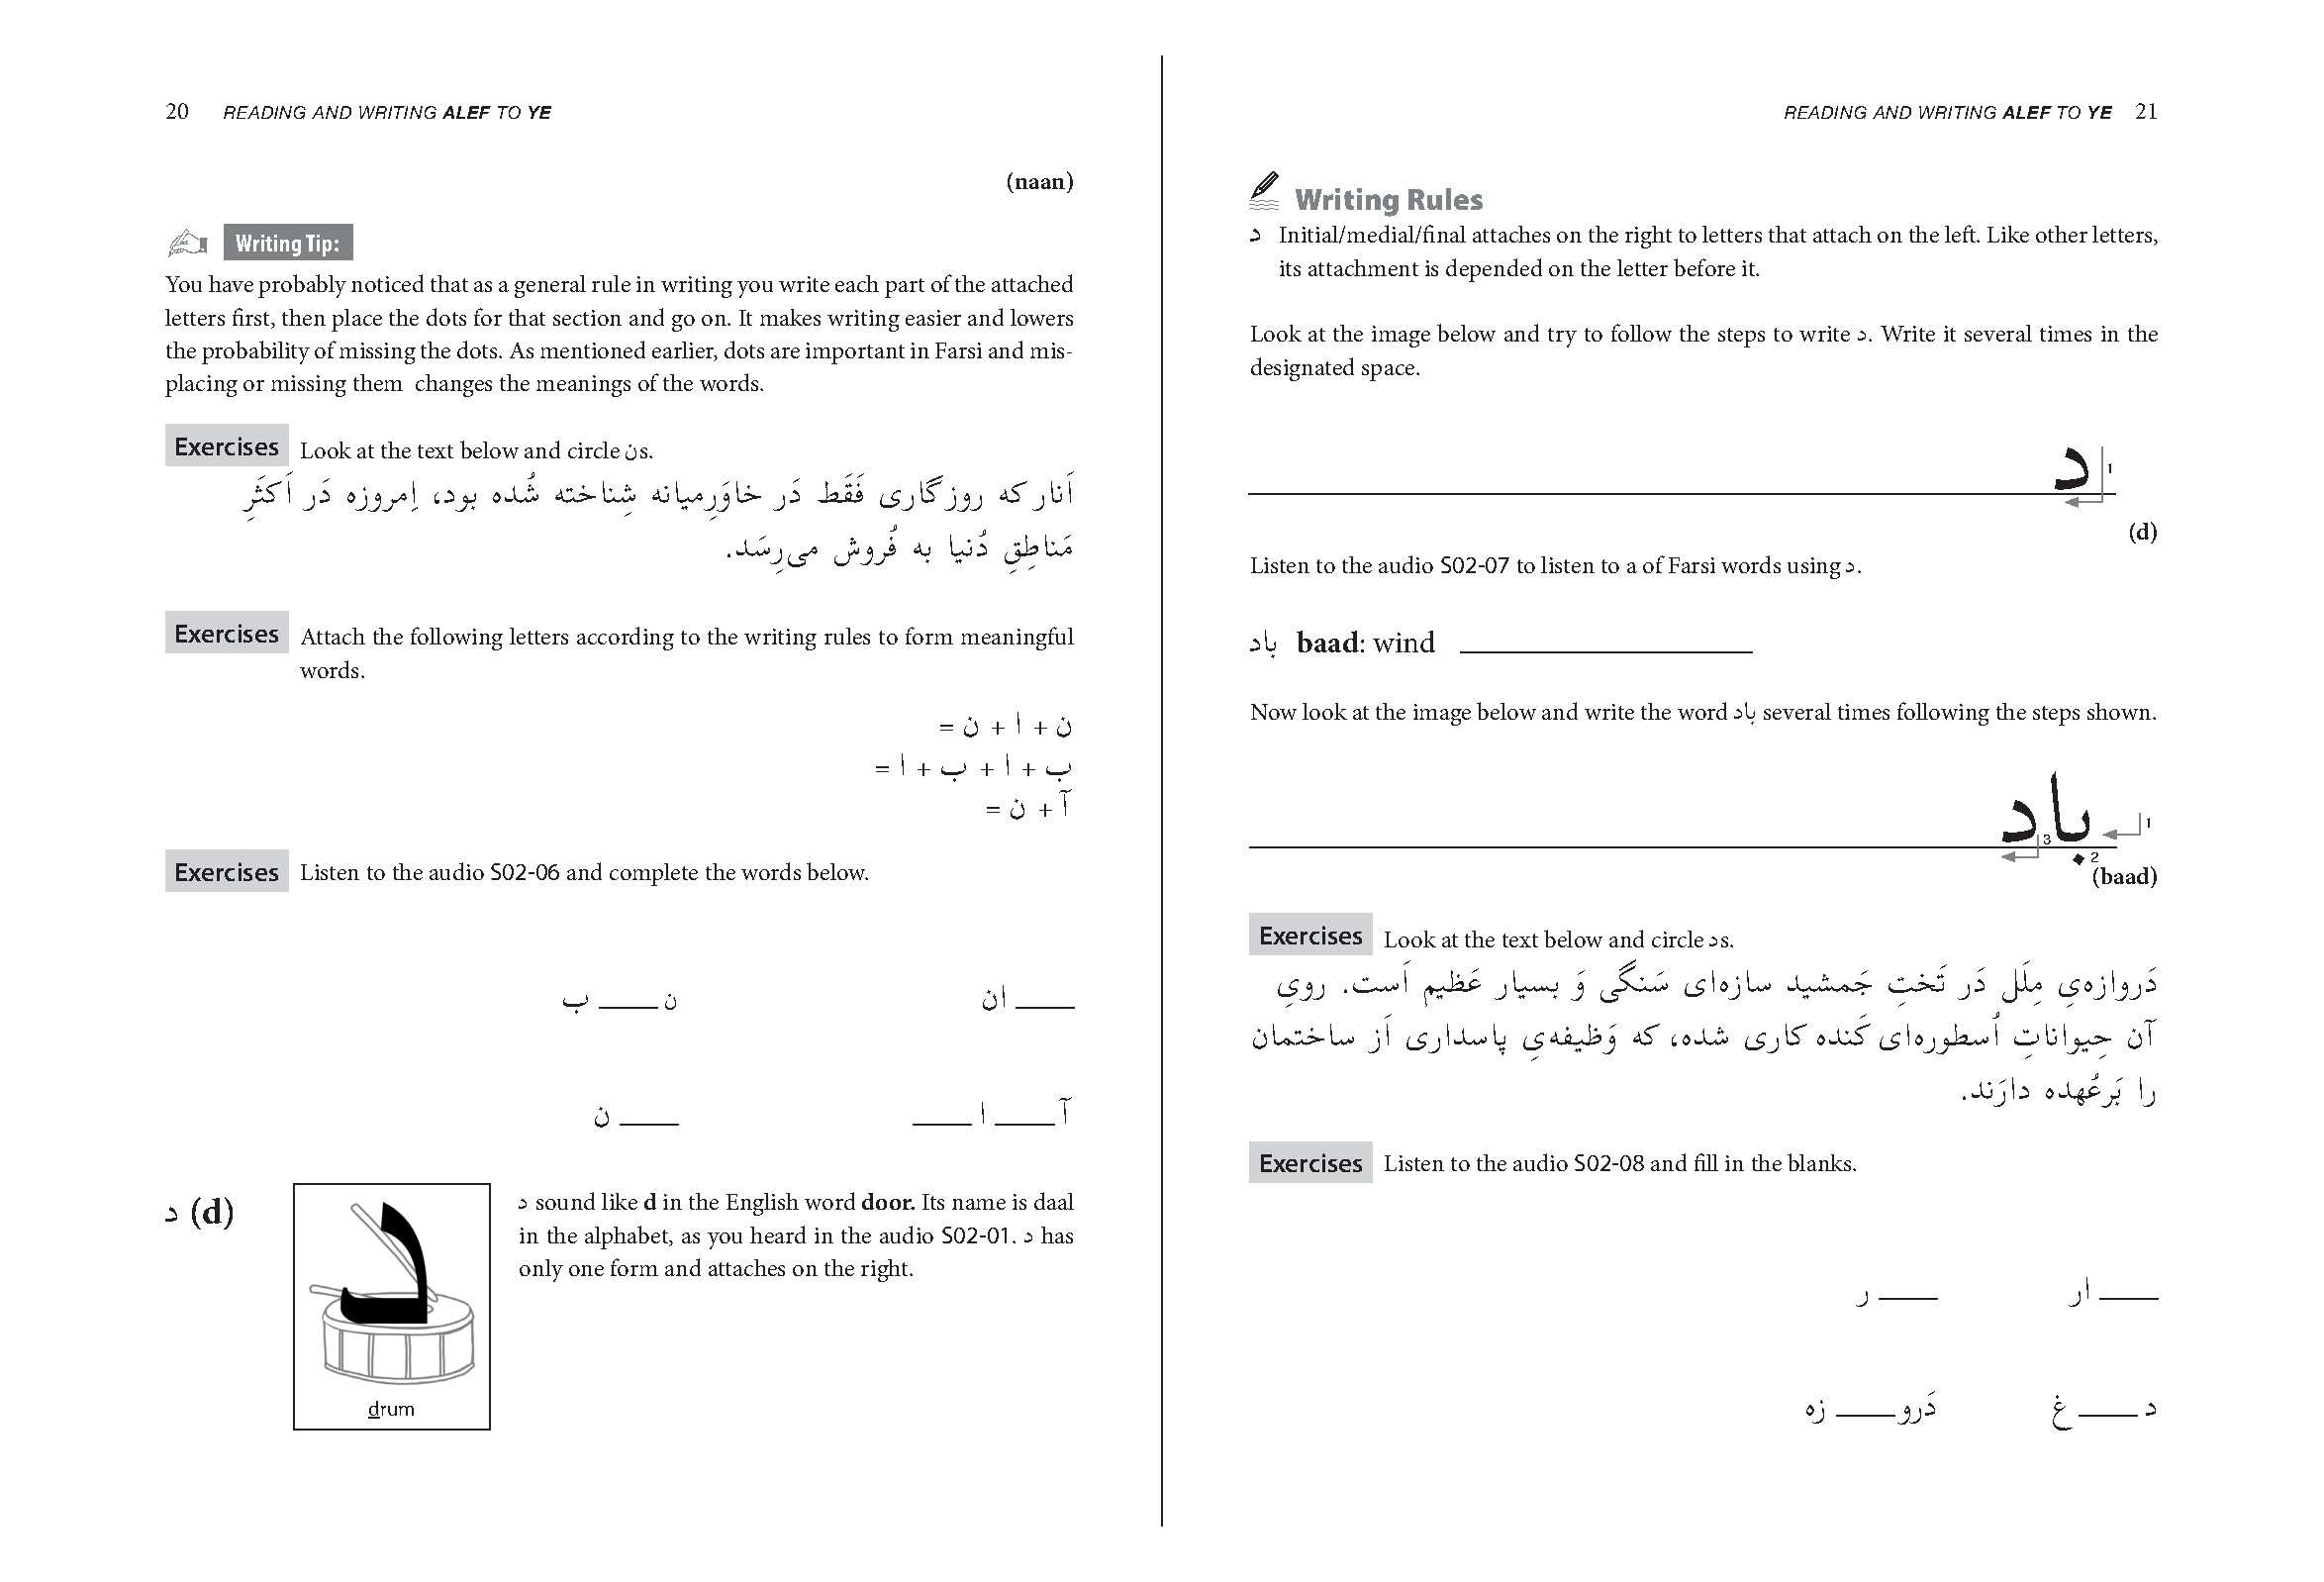 Reading & Writing Farsi (Persian): A Workbook for Self-Study